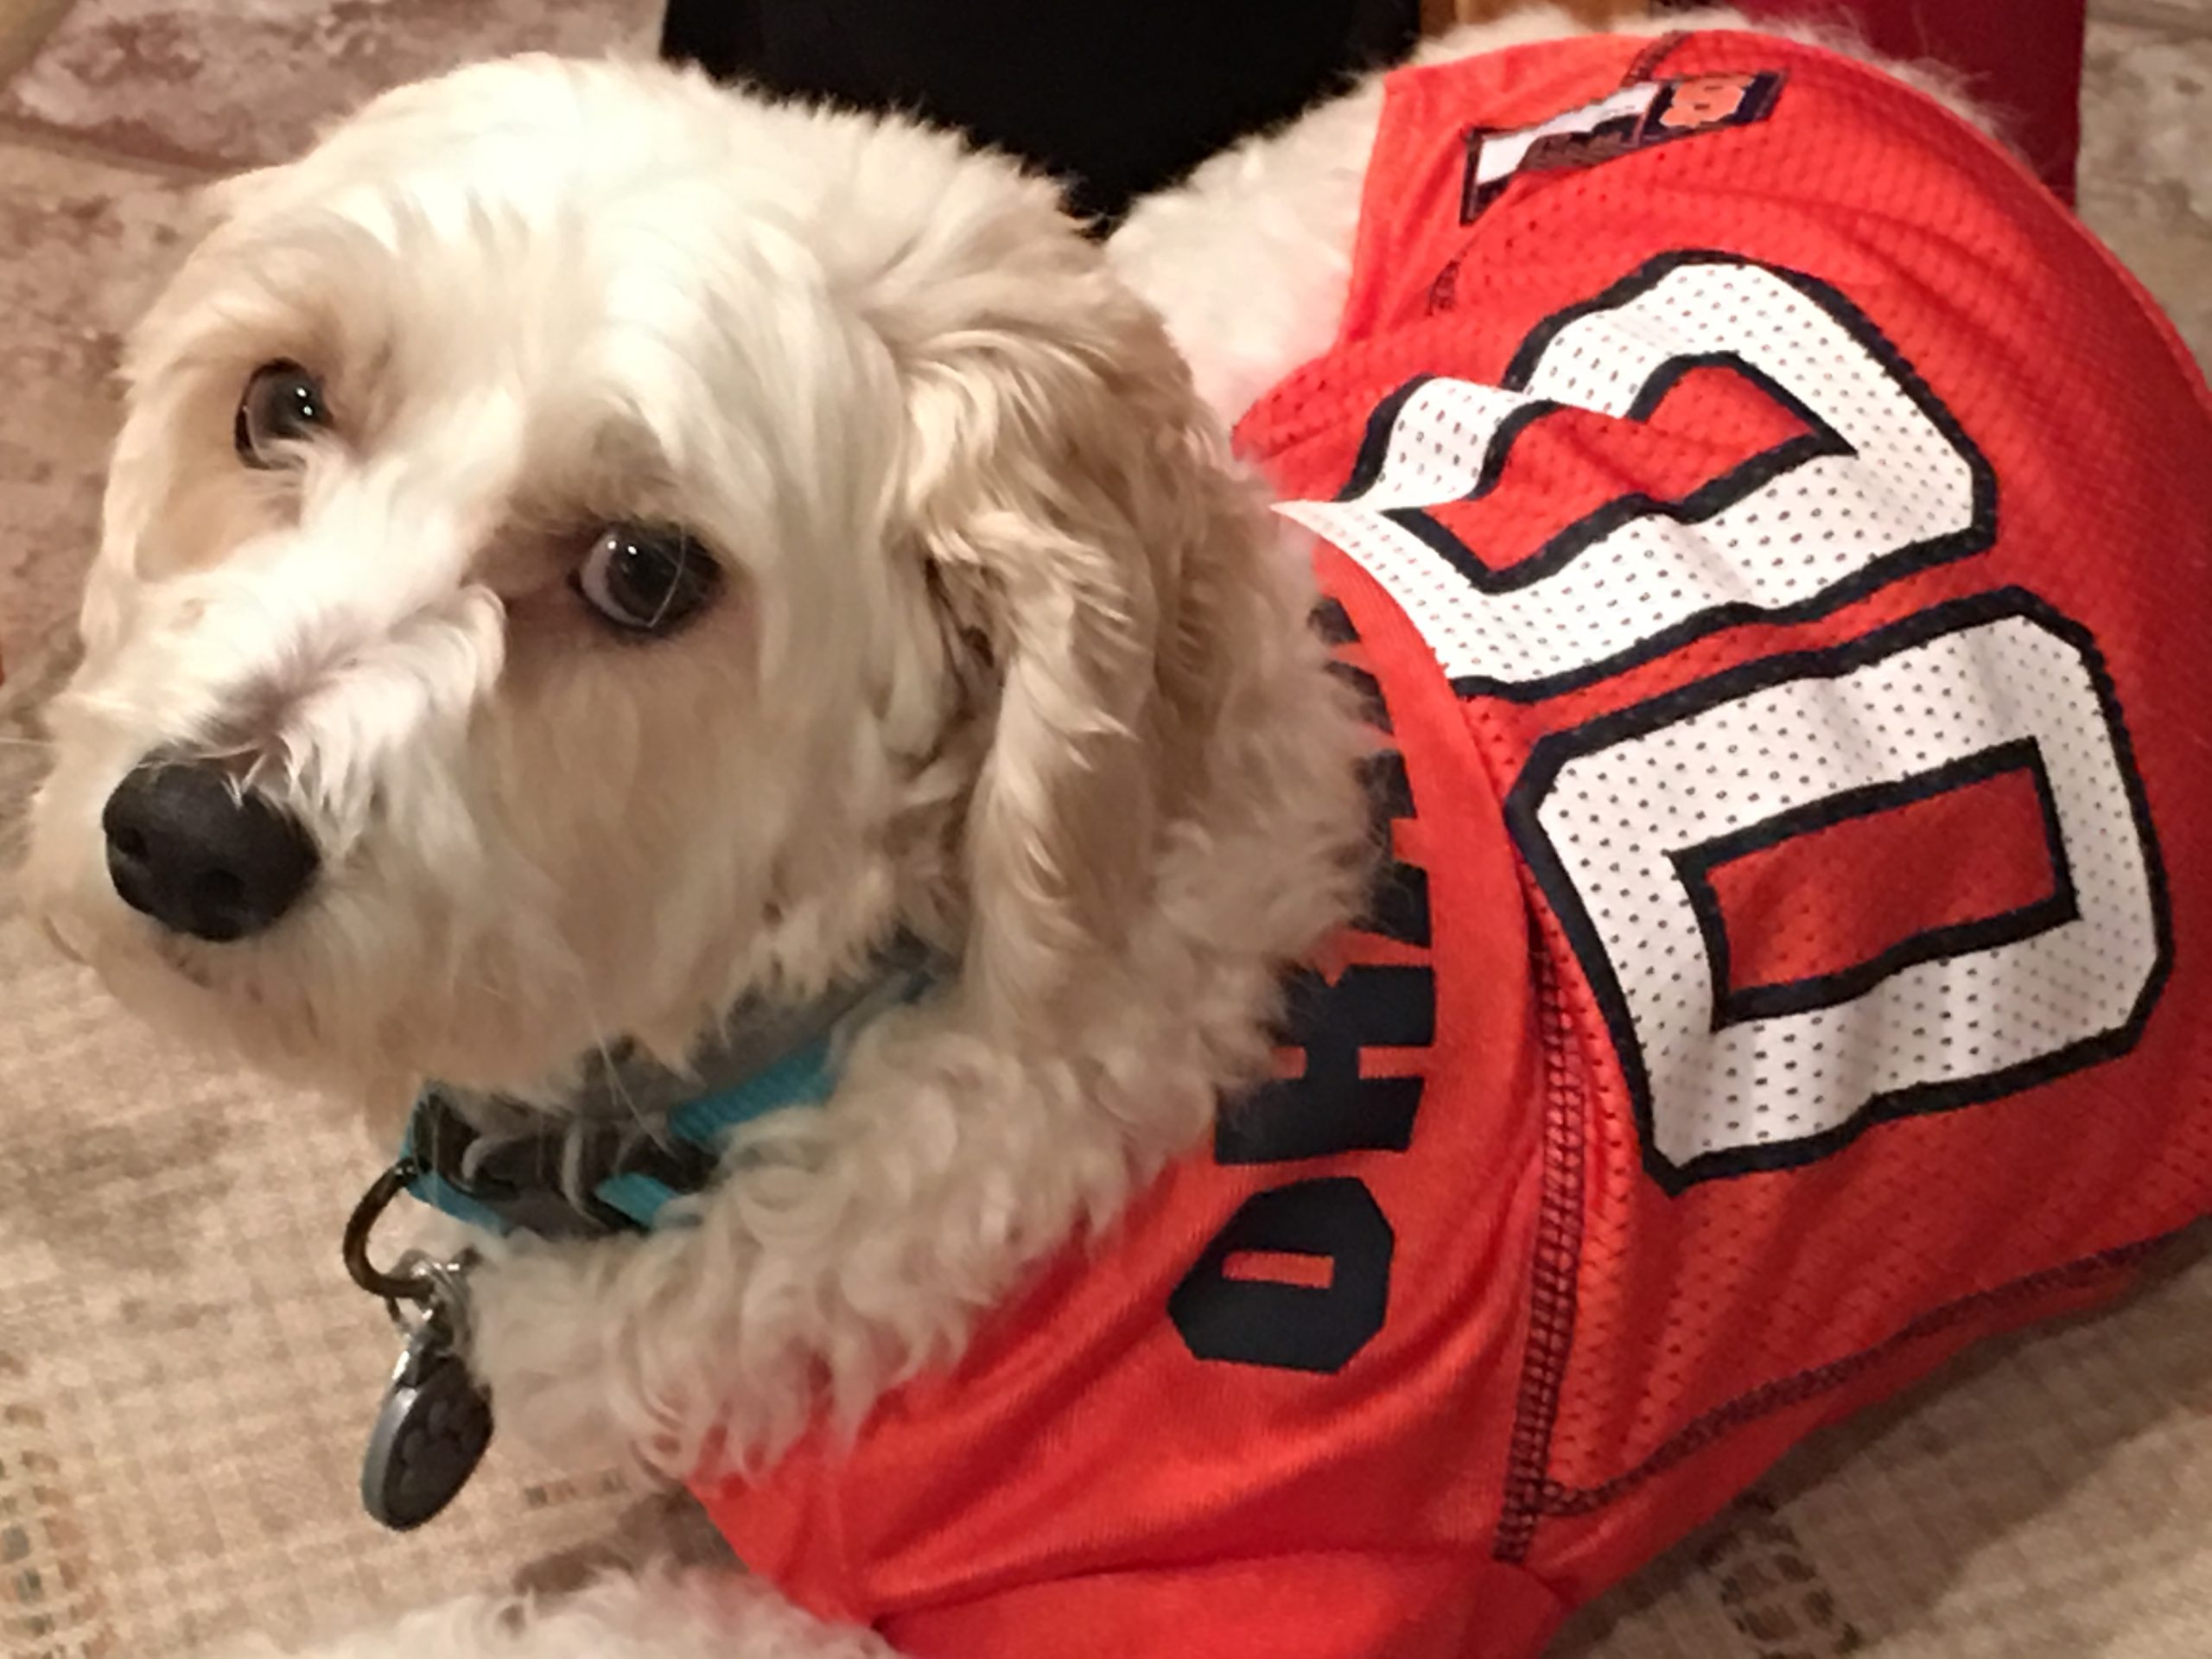 Dog in a syracuse orange jersey